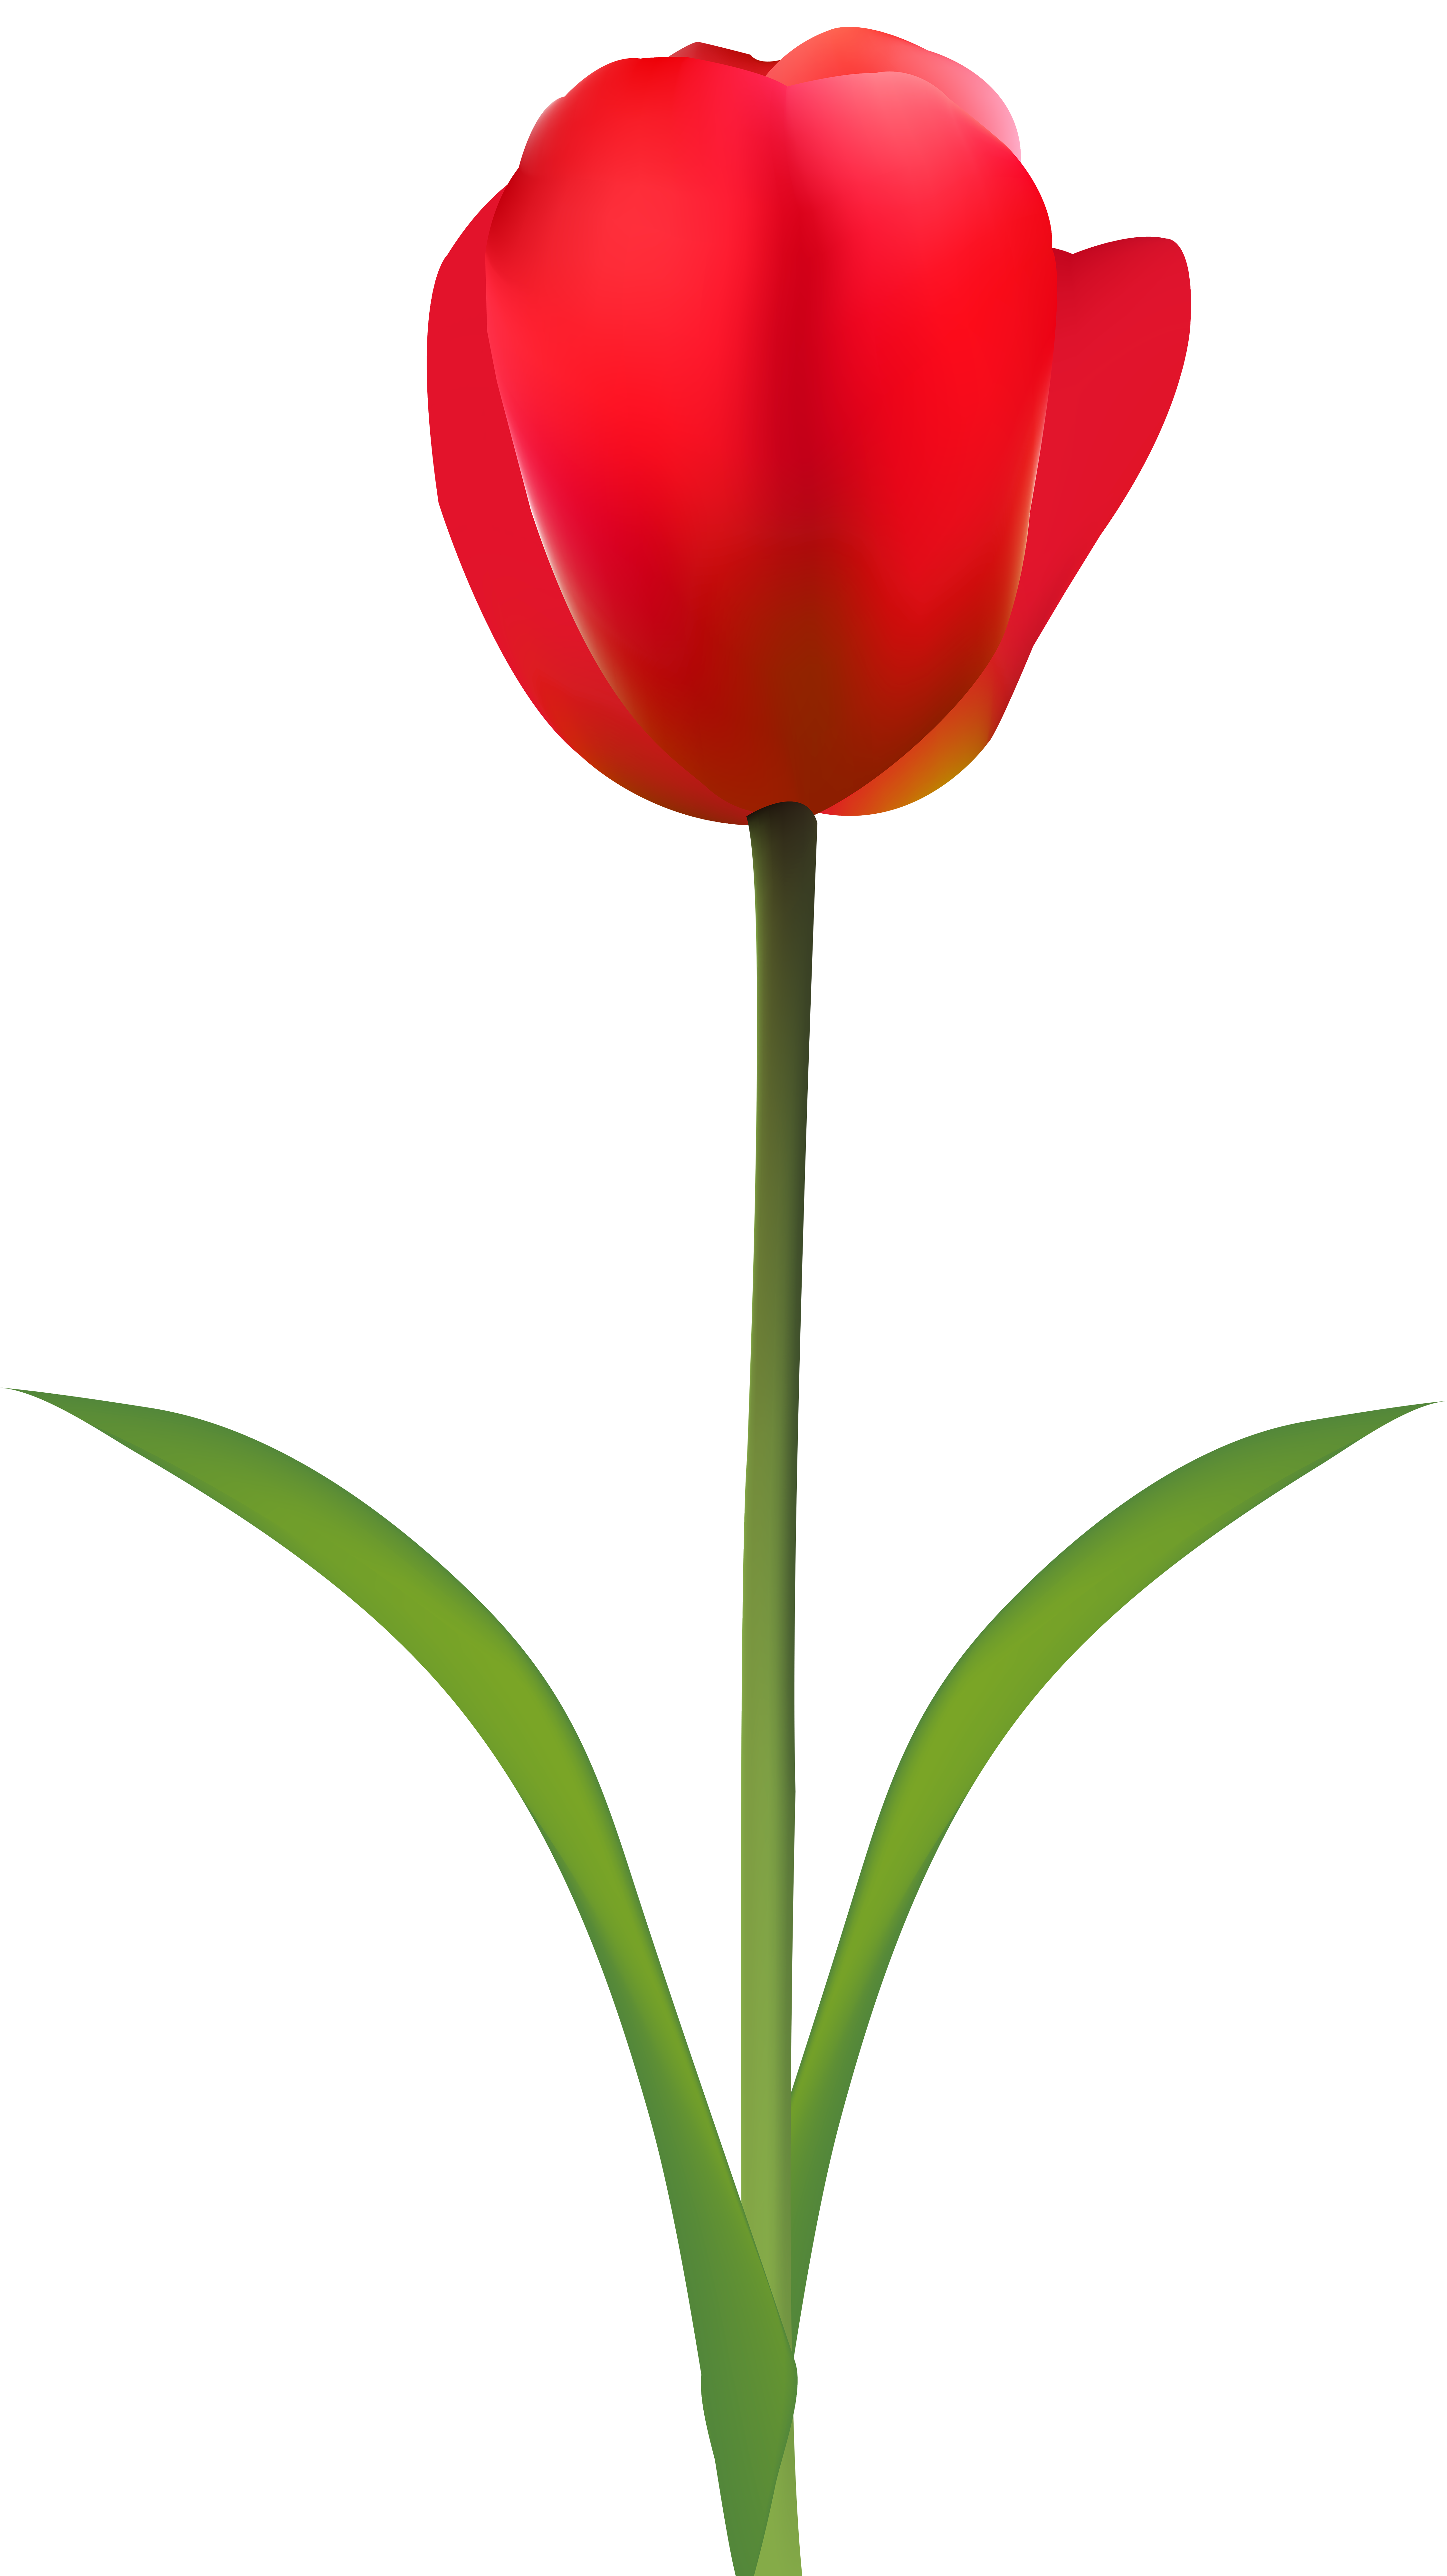 Red Tulip Transparent Clip Art Image | Gallery ...